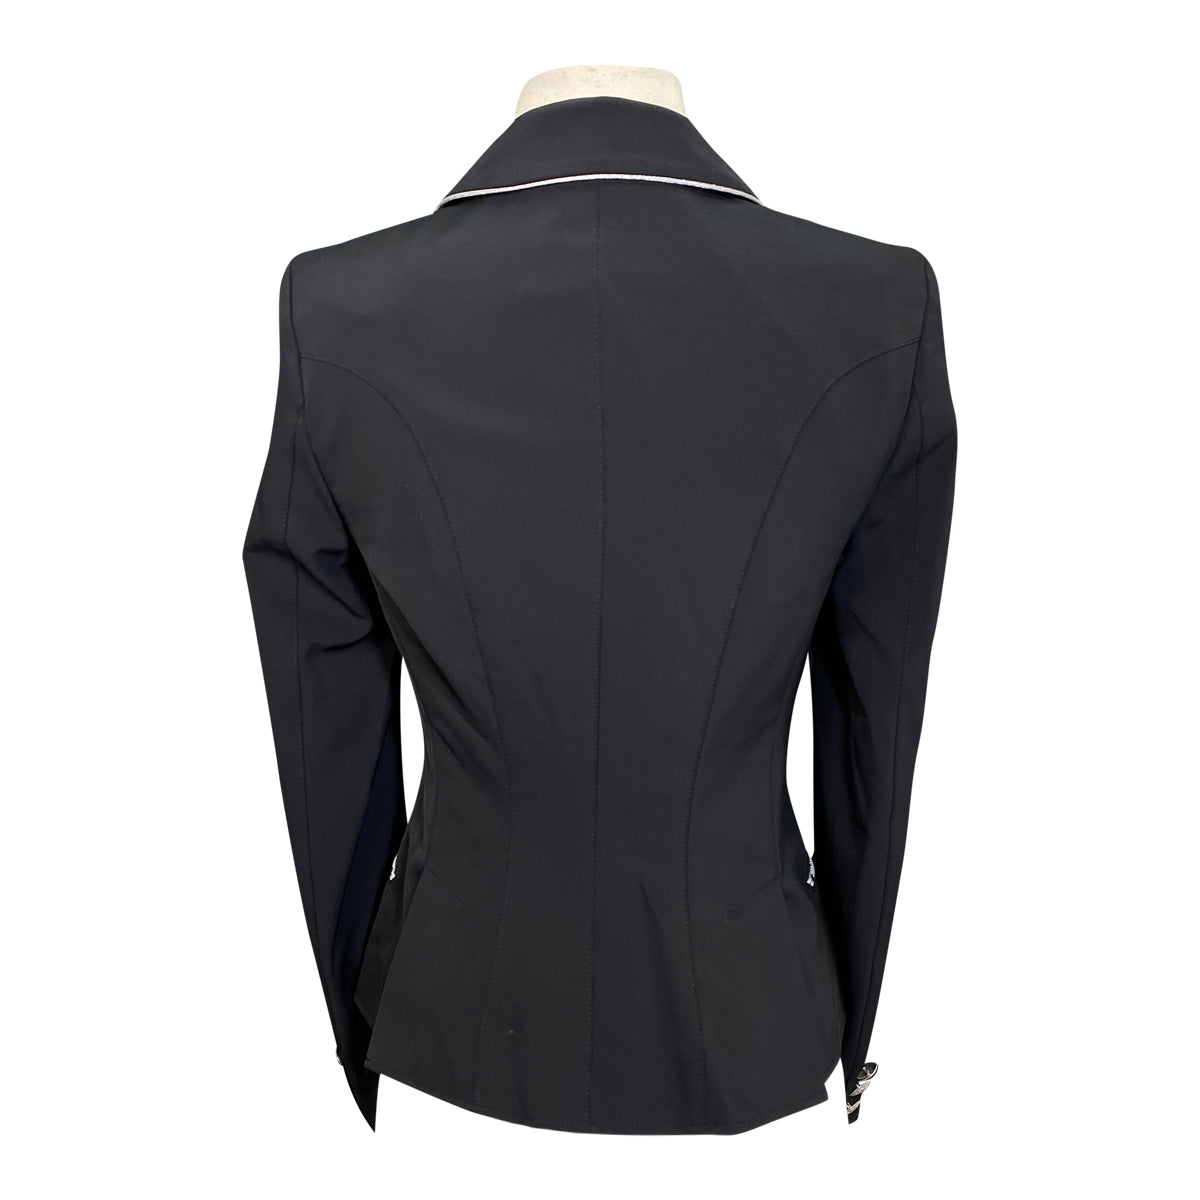 Iris Bayer Ladies Show Jacket in Black